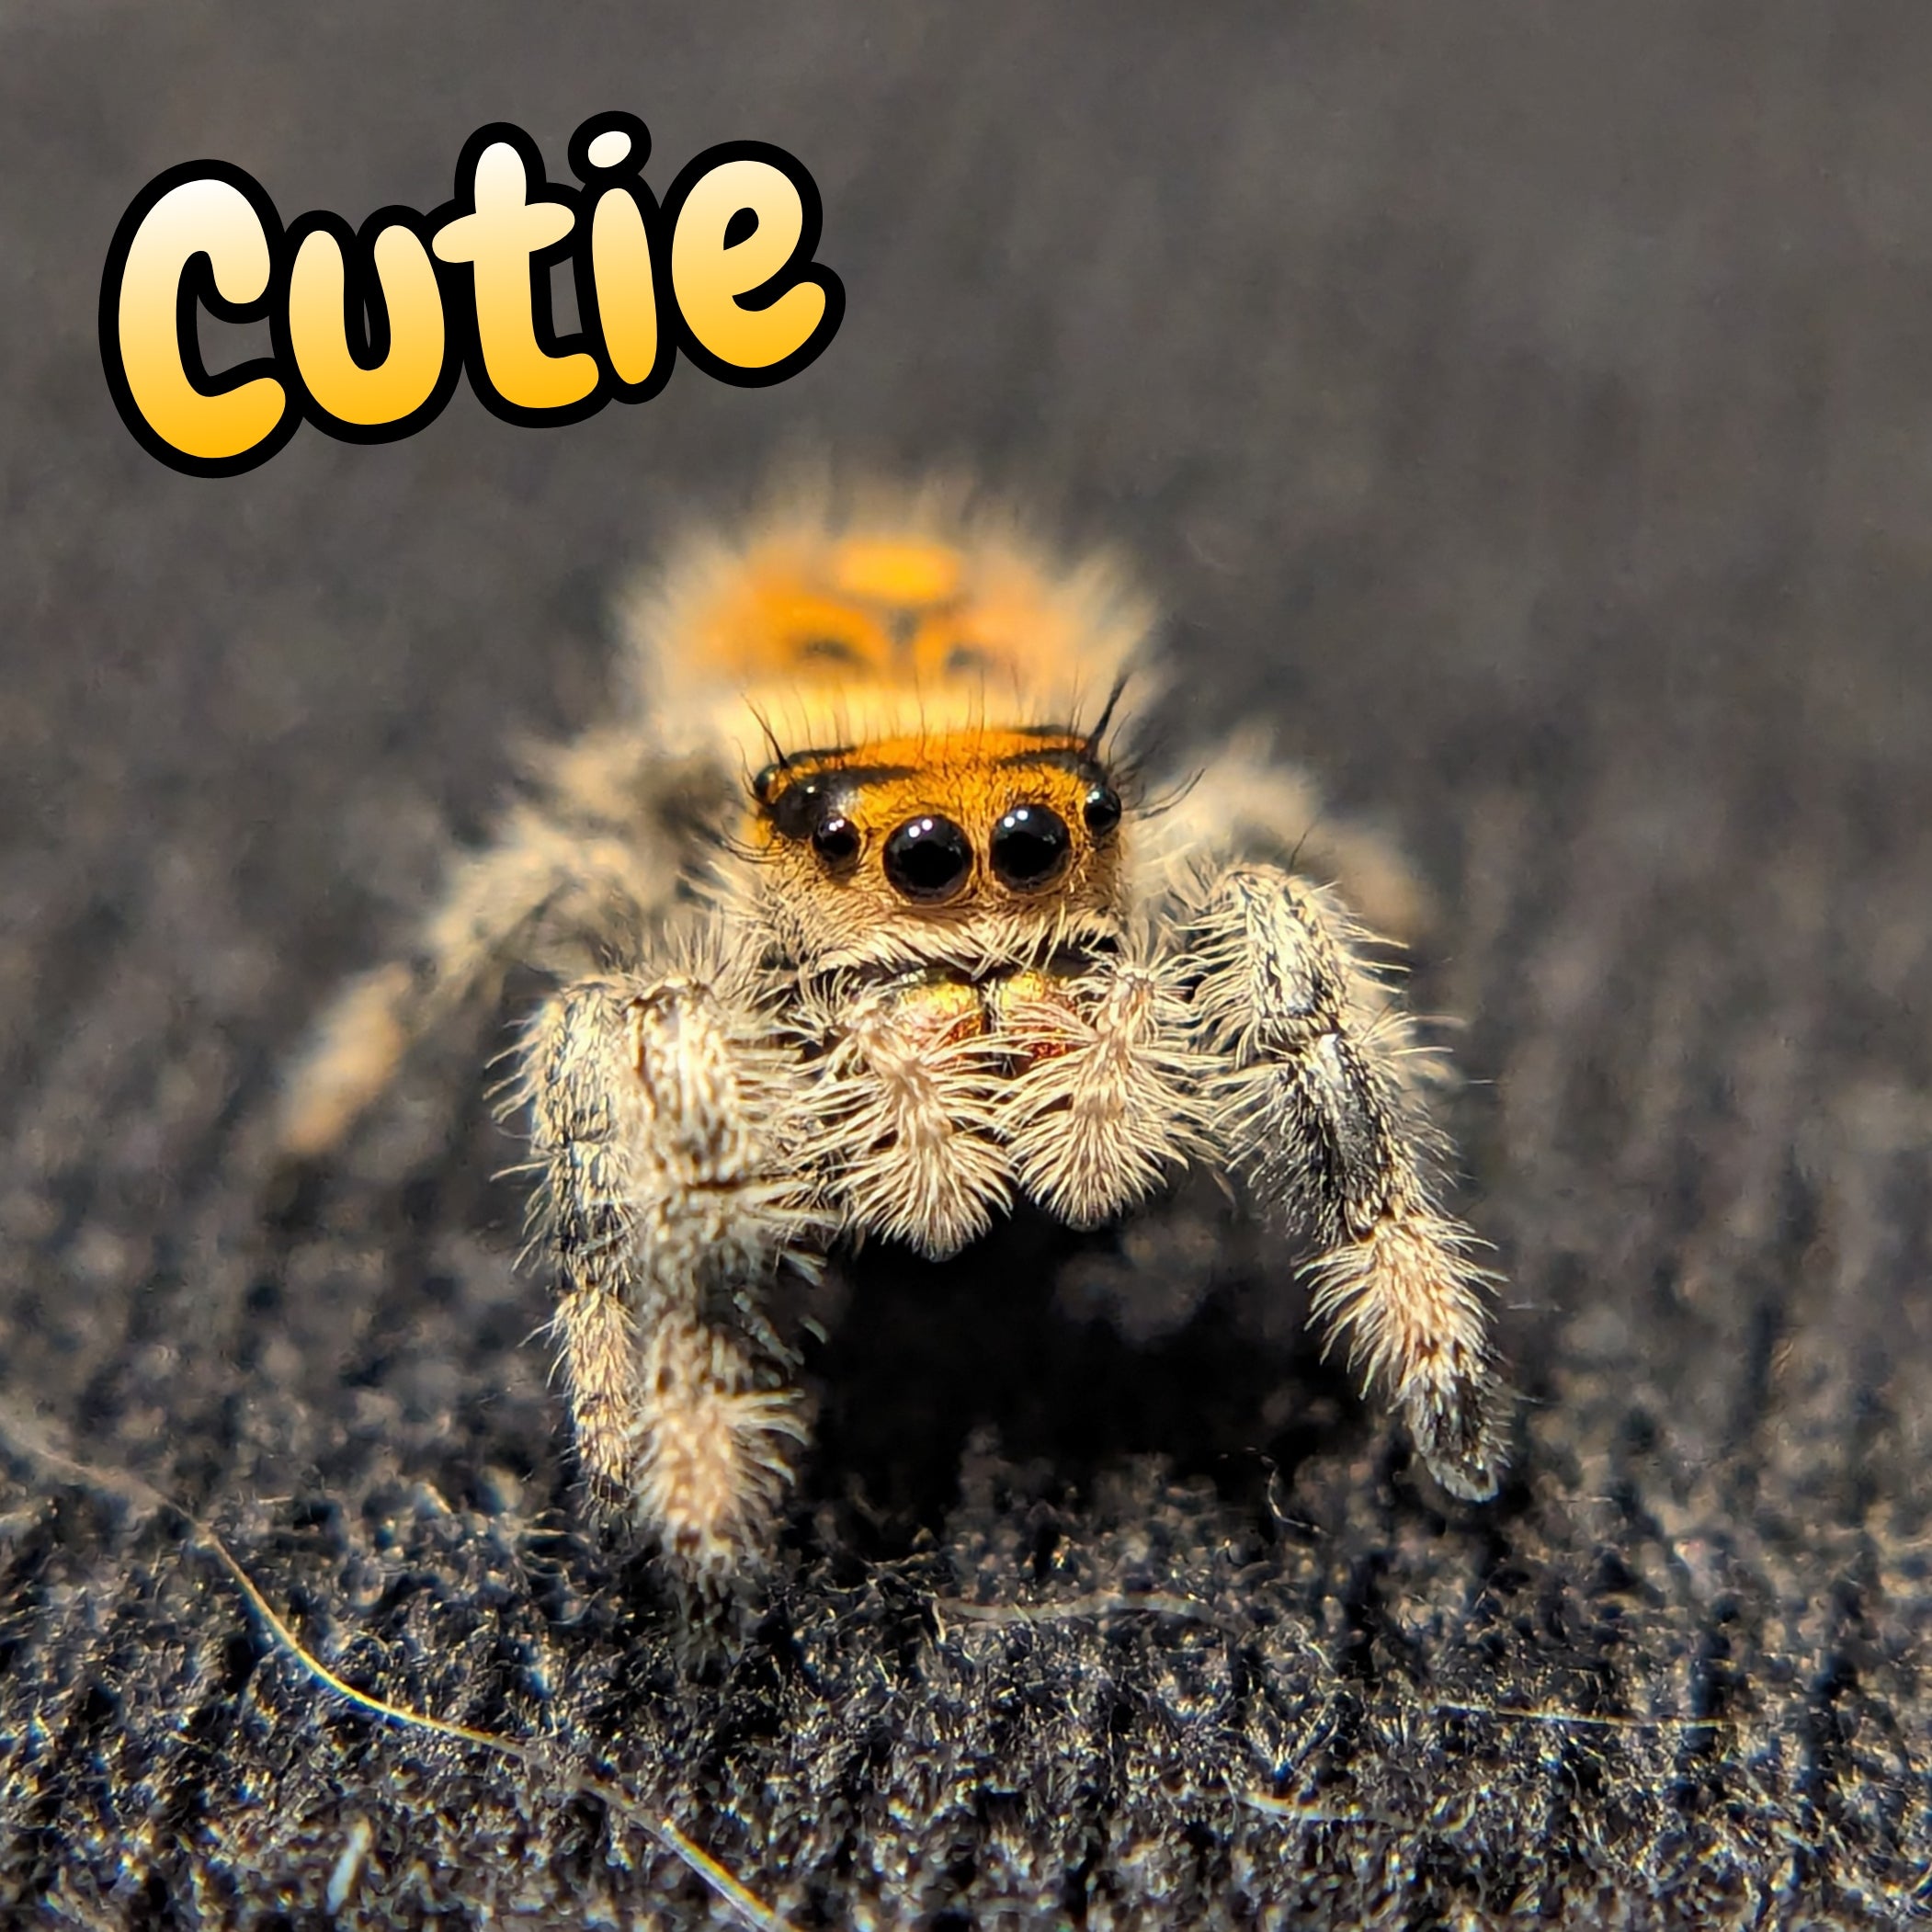 Regal Jumping Spider "Cutie"